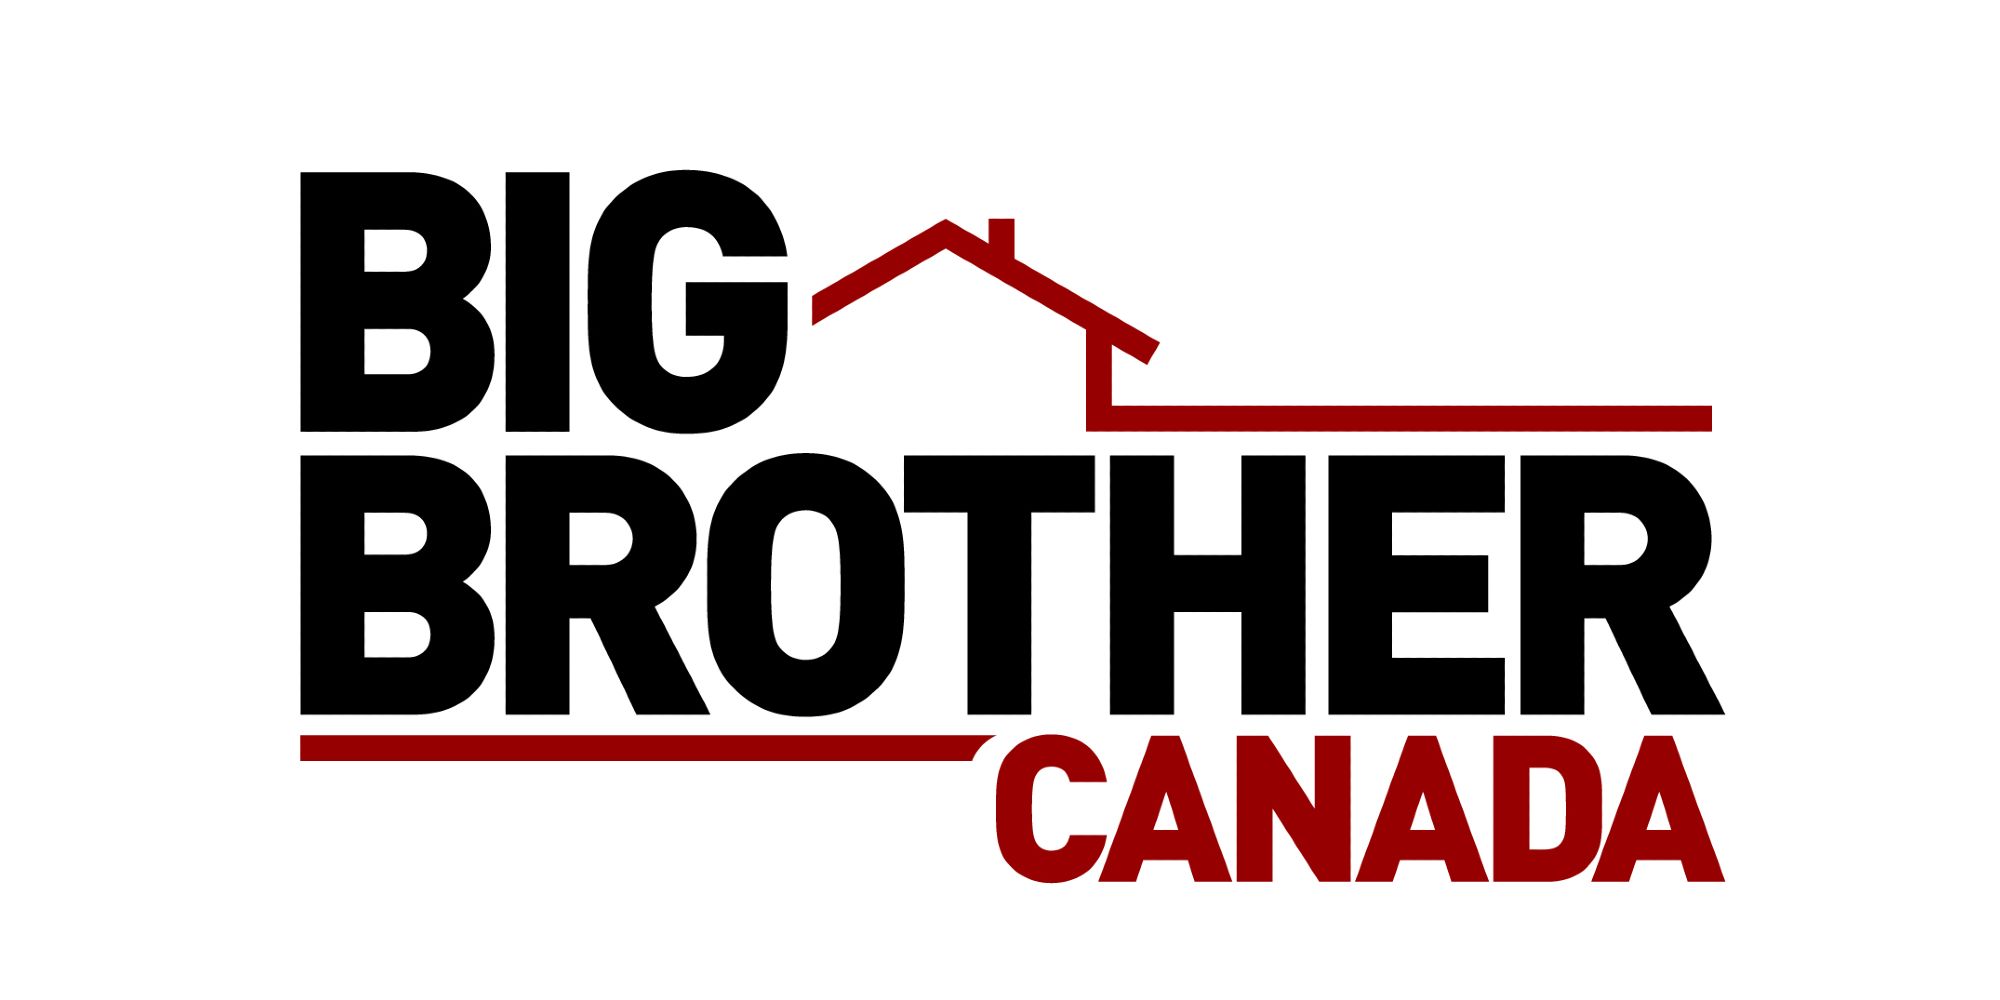 Big Brother Canada logo